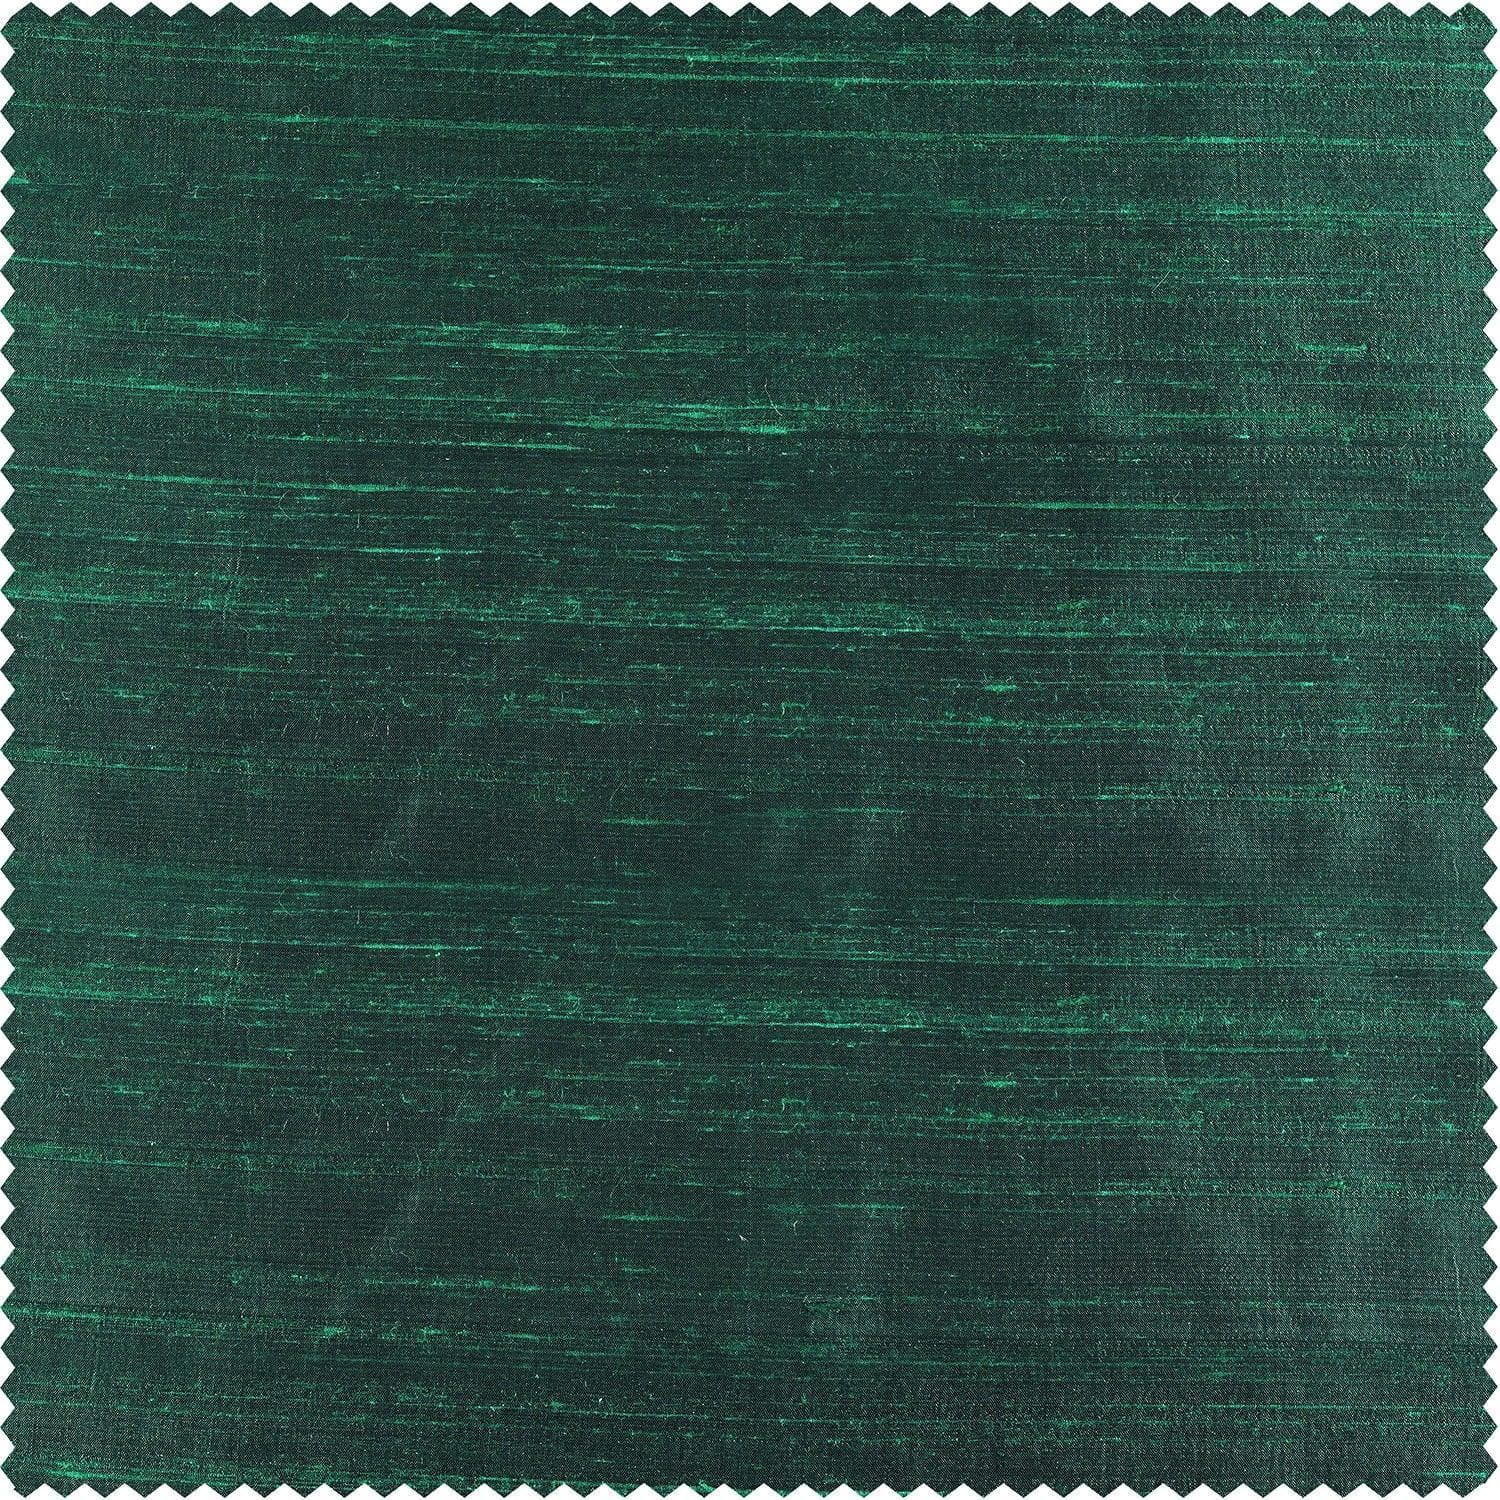 Carnival Green Textured Dupioni Silk Swatch